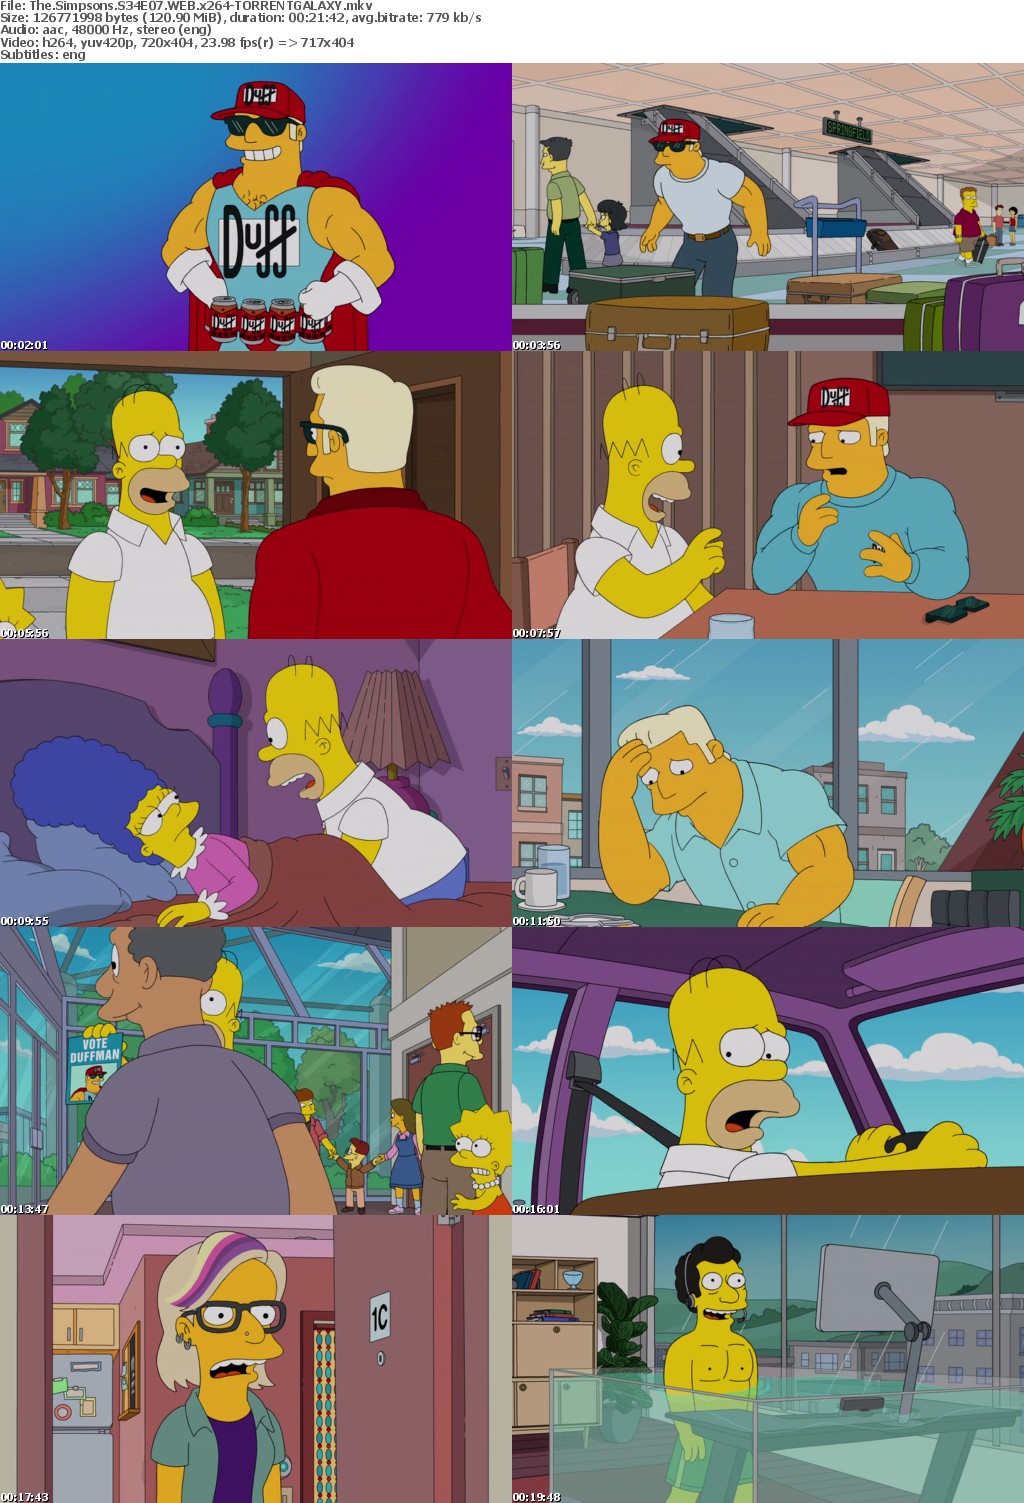 The Simpsons S34E07 WEB x264-GALAXY